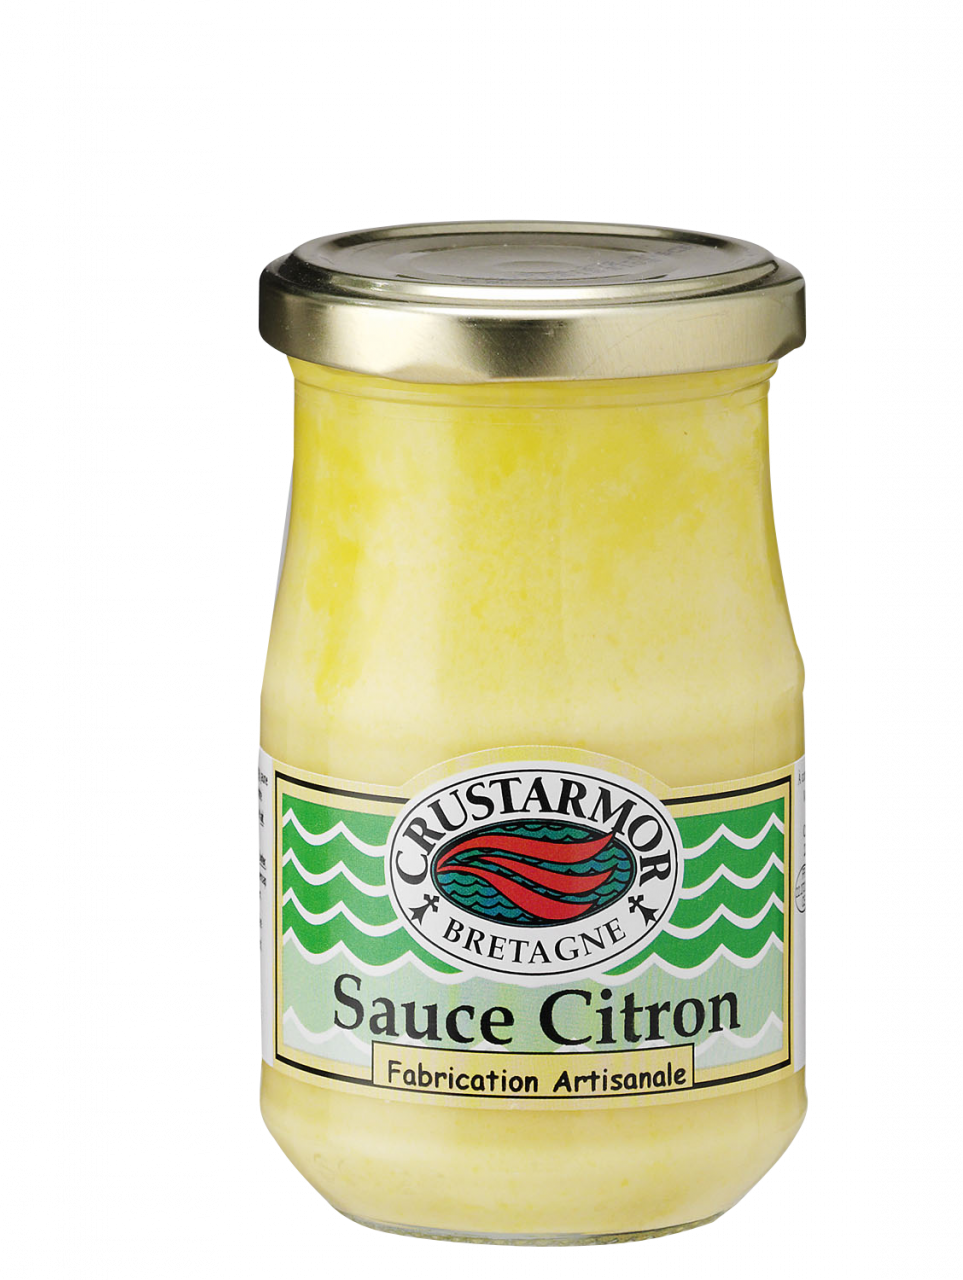 Sauce Citron aus der Bretagne von CRUST?ARMOR